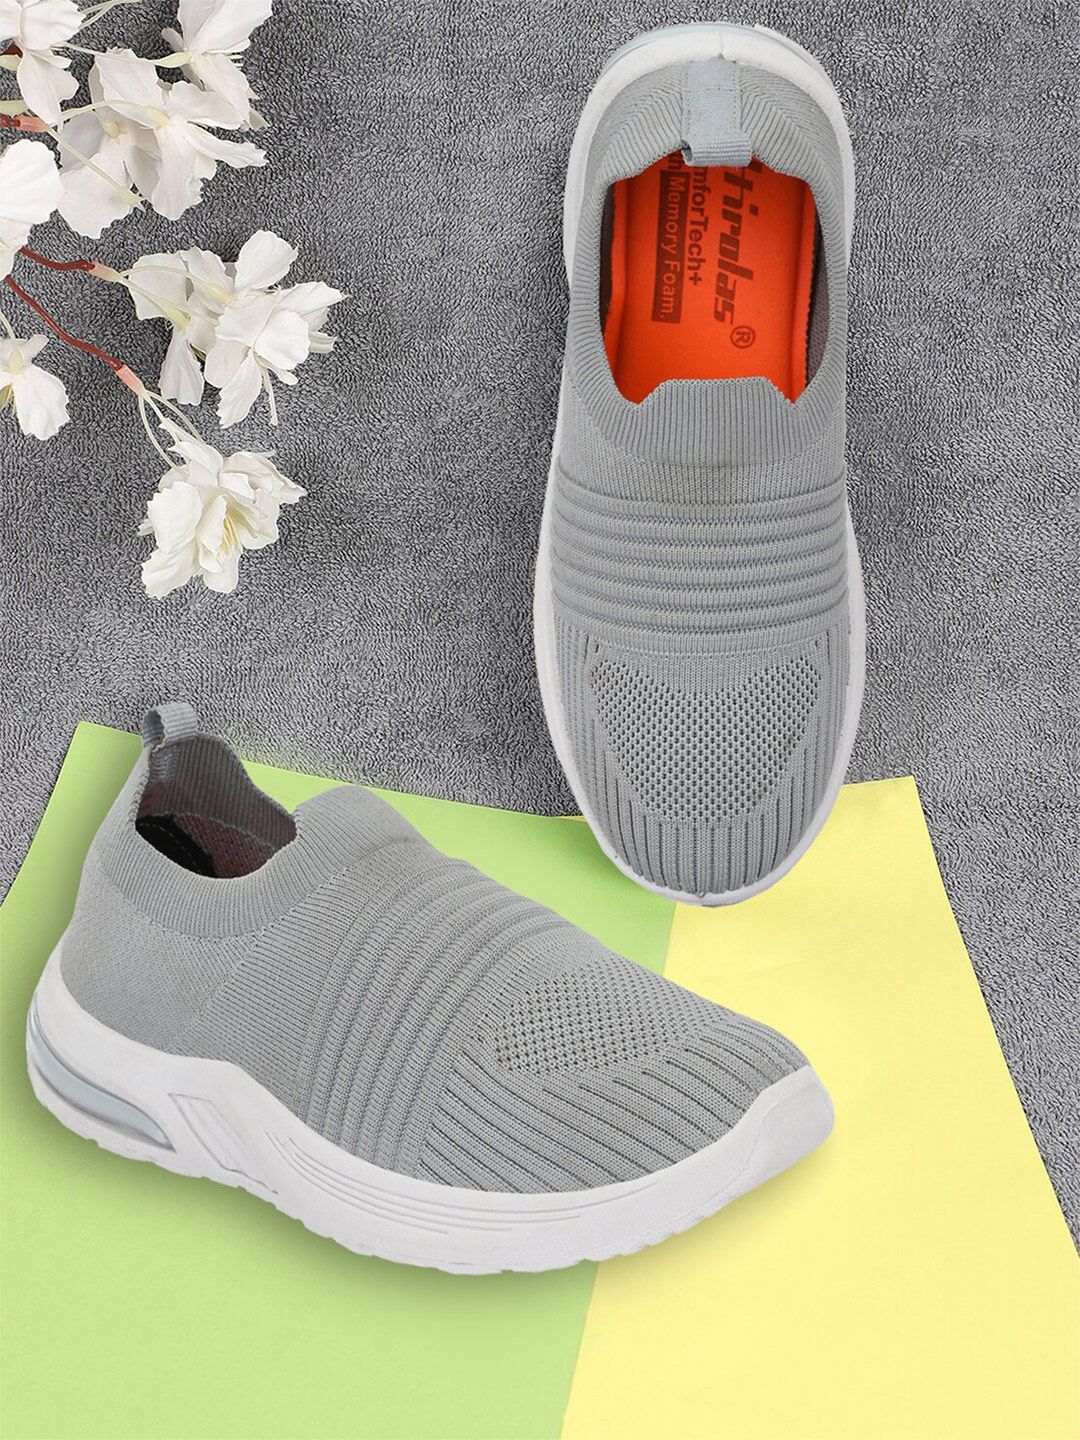 HIROLAS Women Grey Mesh Running Shoes Price in India